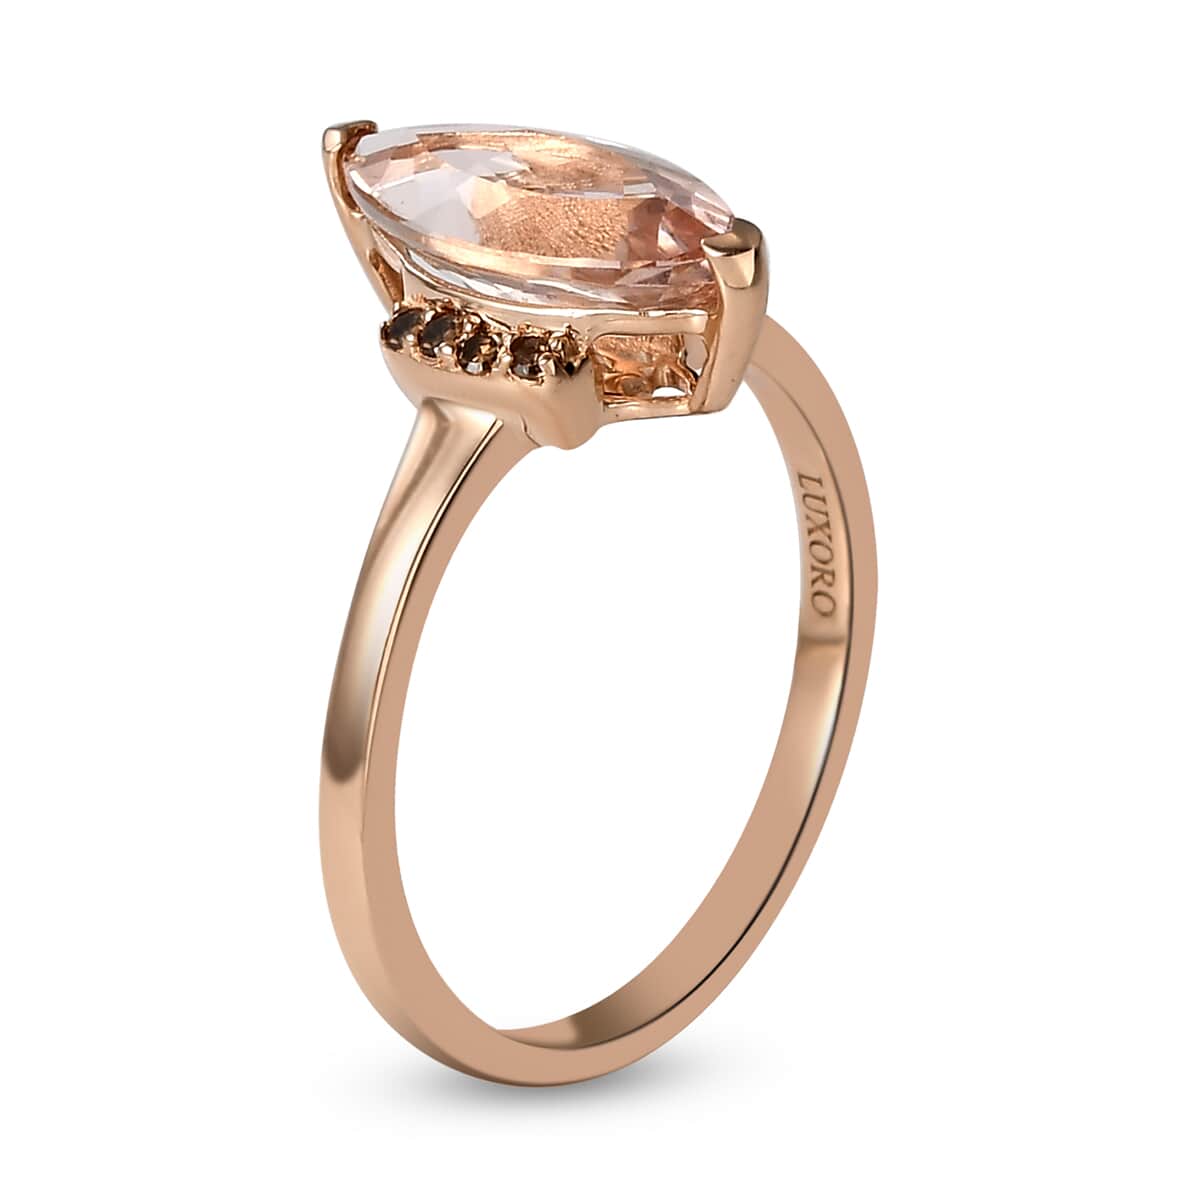 LUXORO 10K Rose Gold Premium Marropino Morganite and Natural Champagne Diamond Ring (Size 8.0) 2.40 Grams 1.75 ctw image number 3